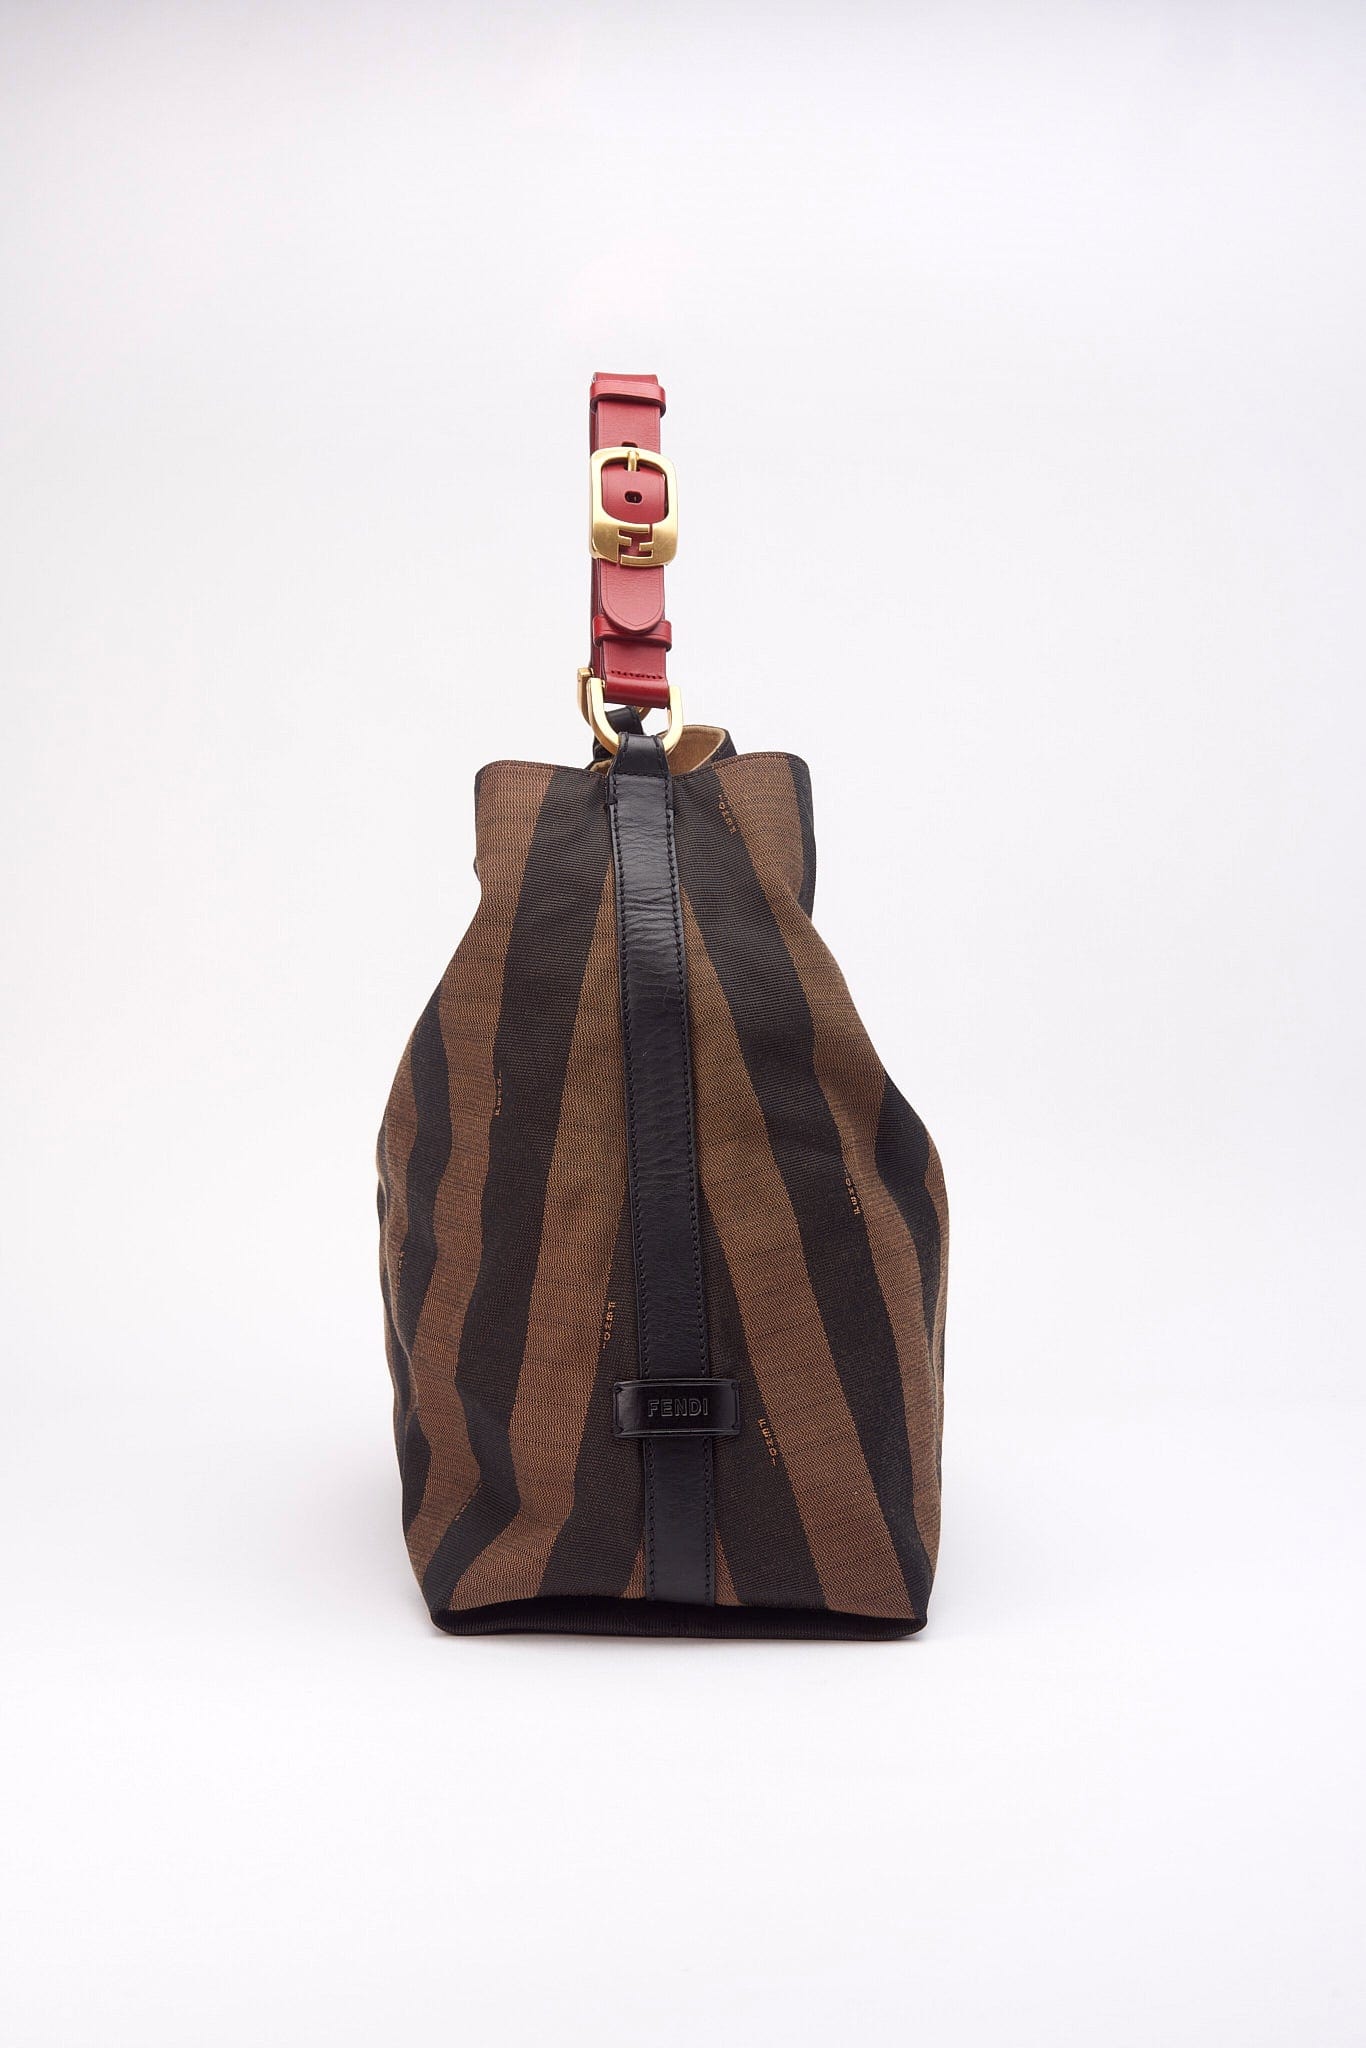 Fendi Vintage Striped Tote Bag